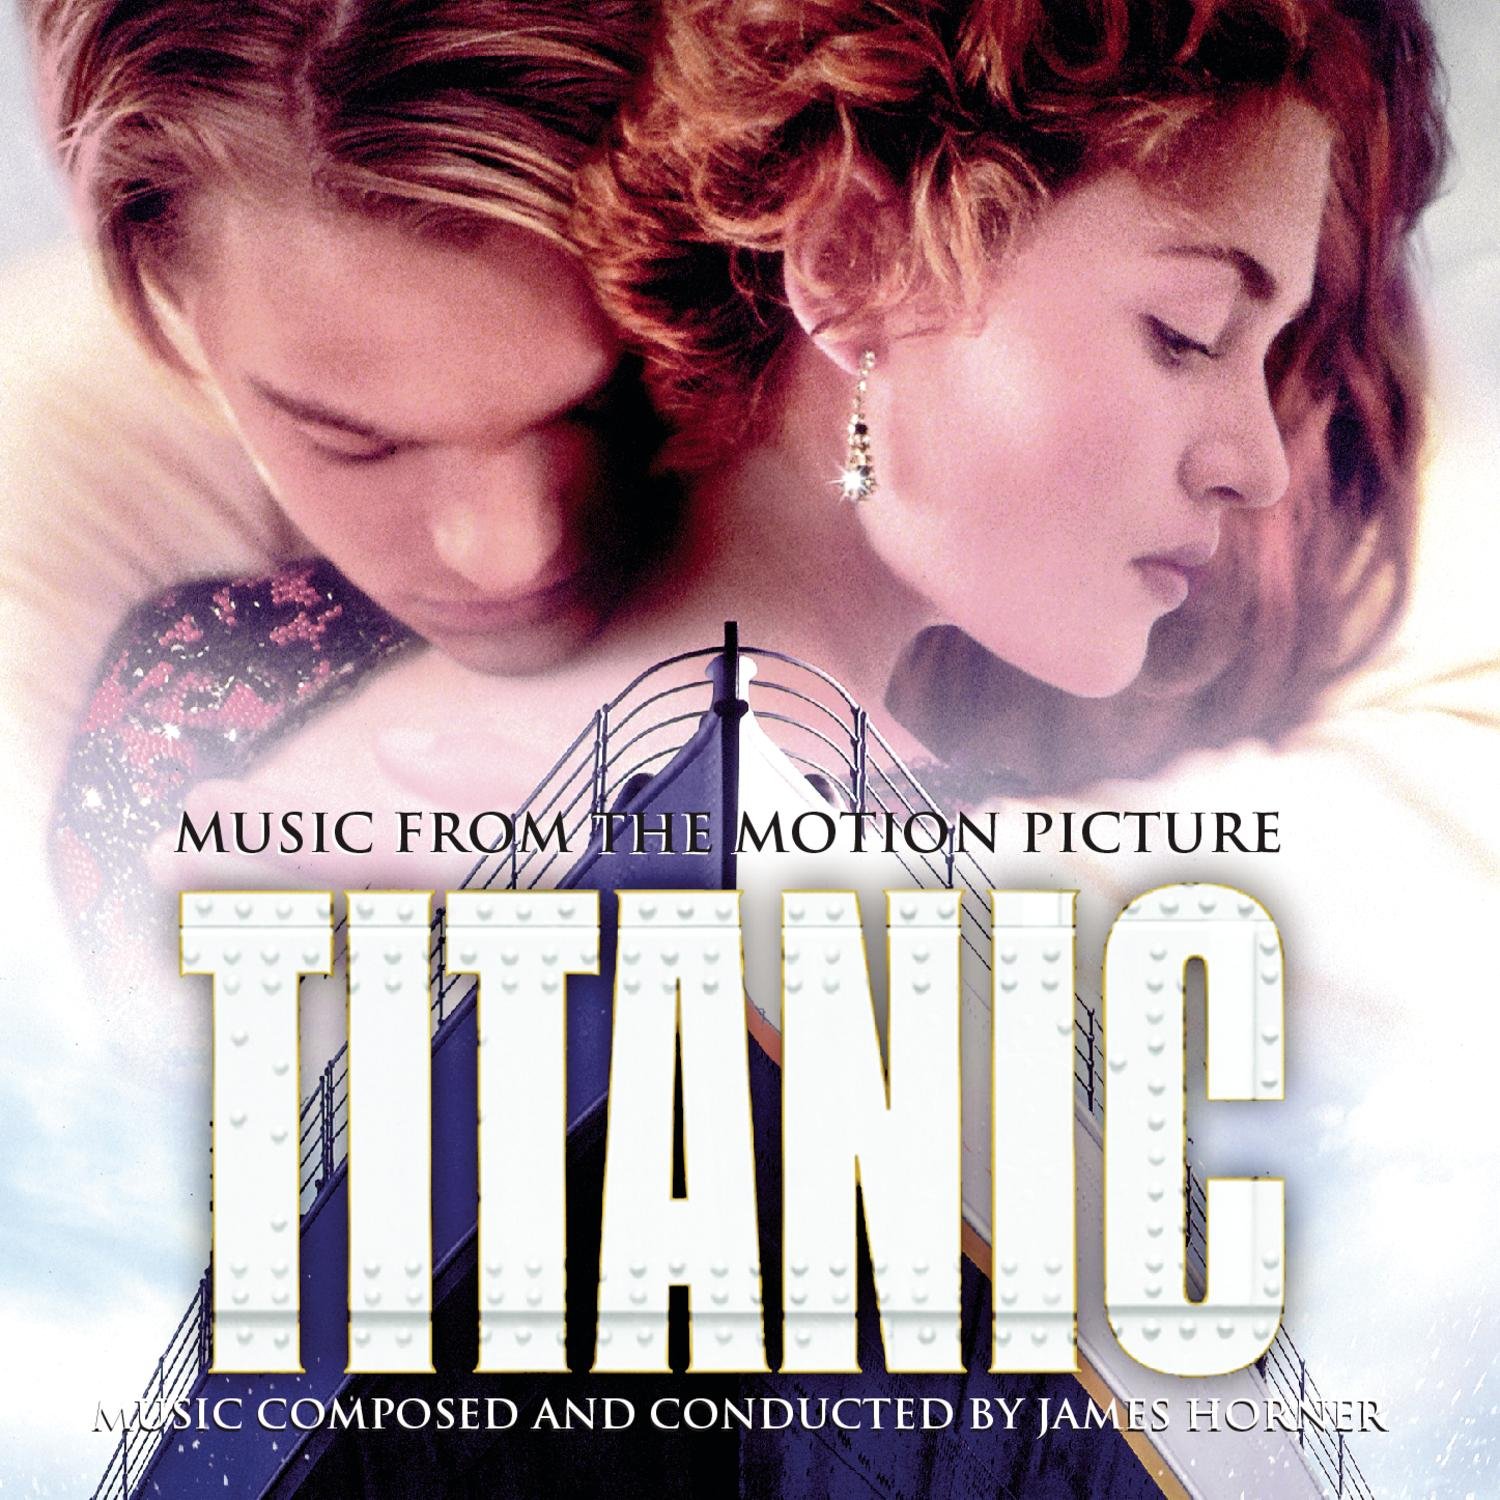 Titanic - Orchestra suite for rent - James Horner